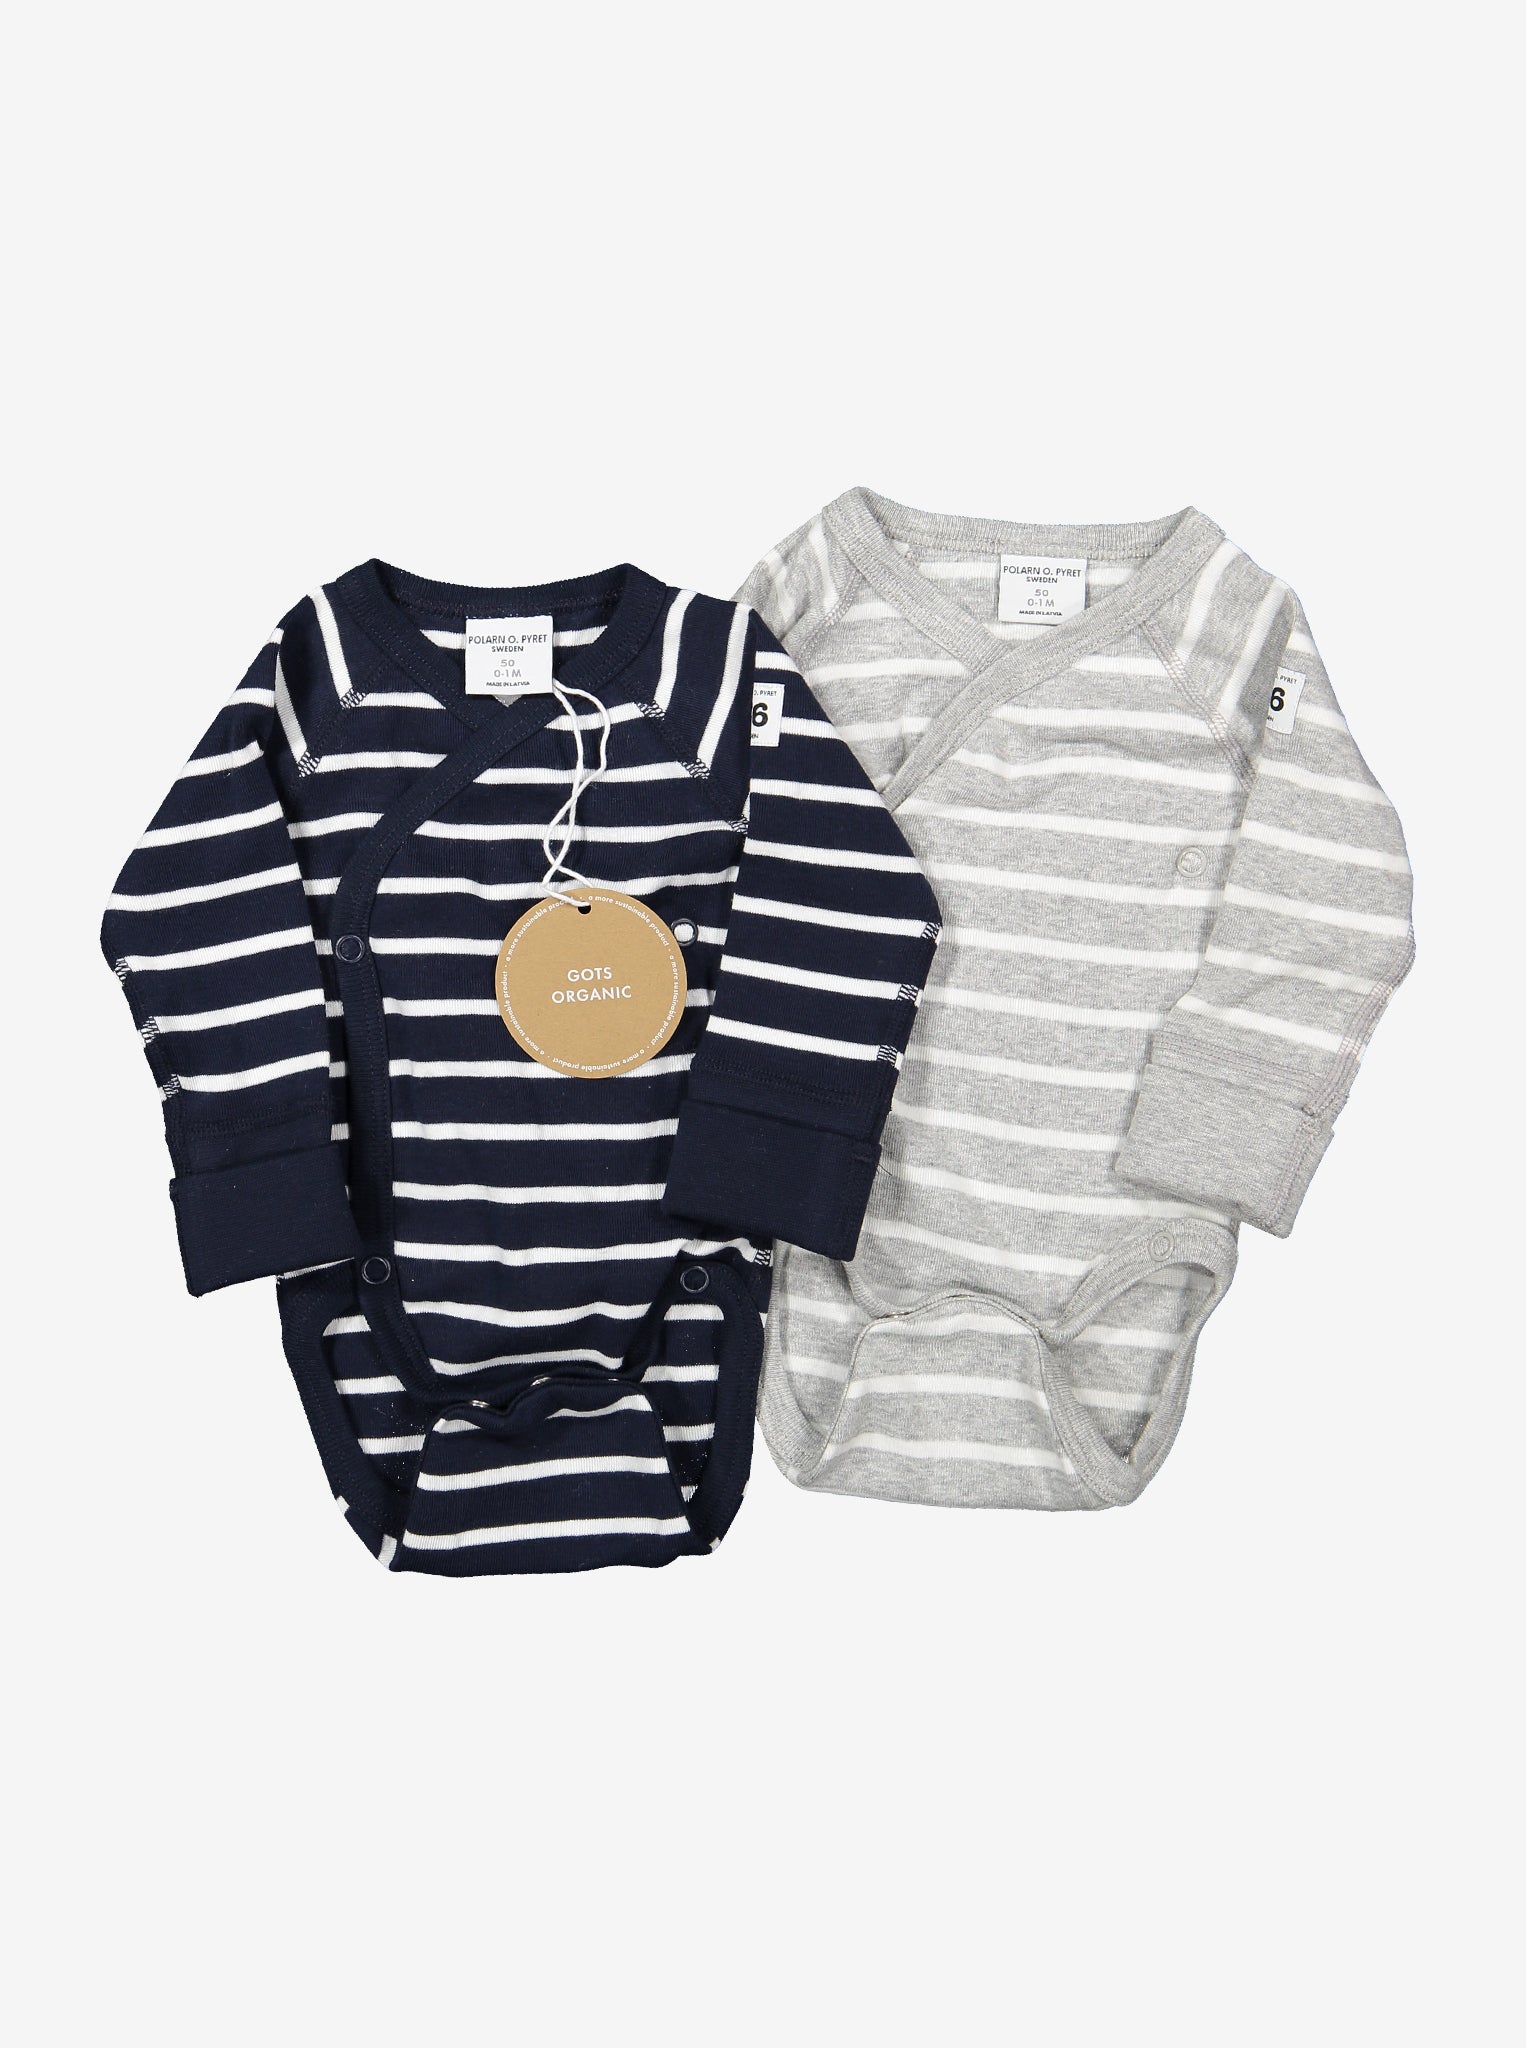 two newborn grey striped quality babygrow, ethical organic cotton, polarn o. pyret